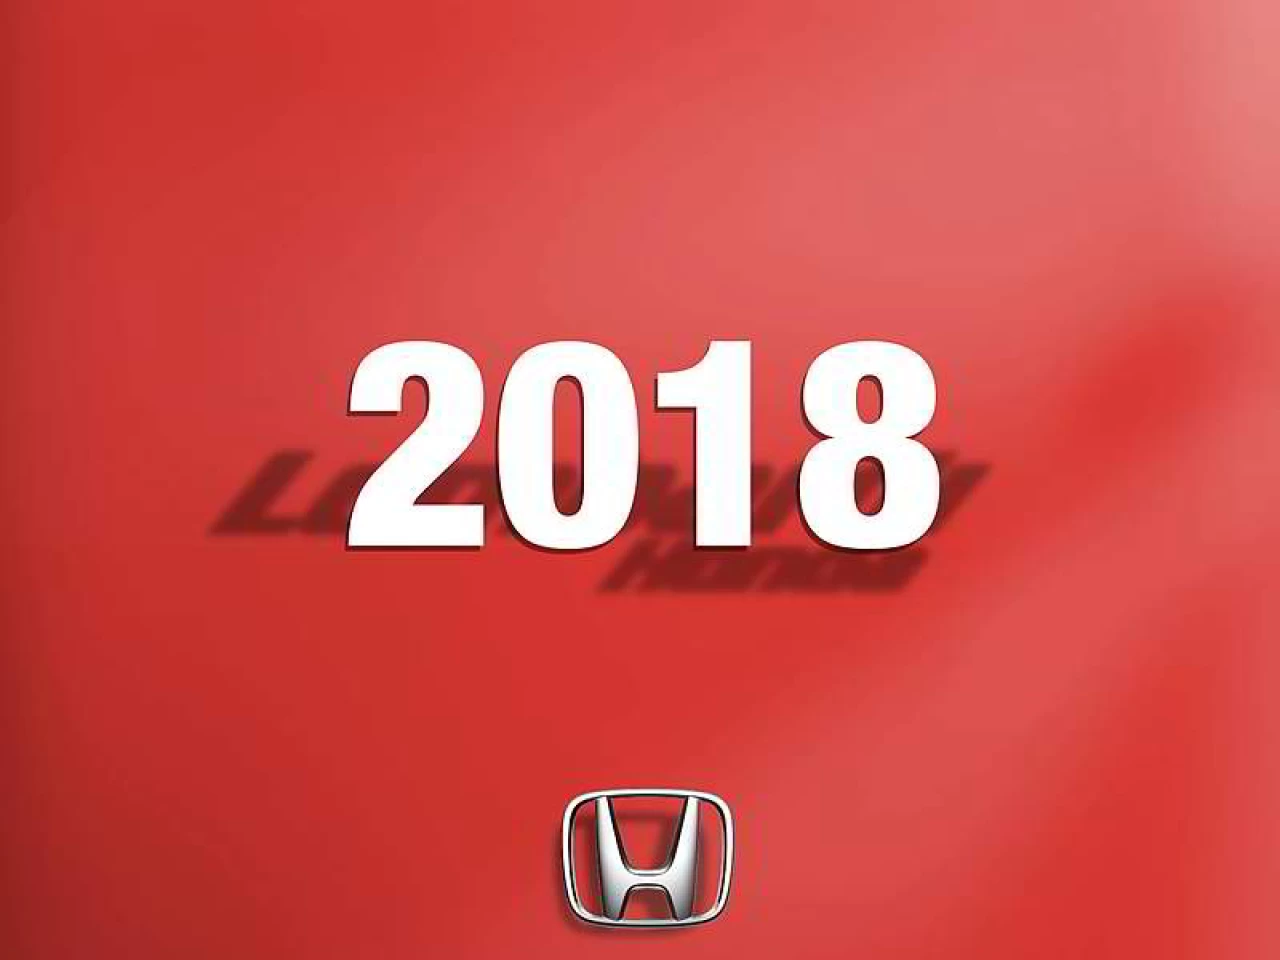 2018 Honda Civic EX https://www.lombardihonda.com/resize/b990ff35b810a3abc0cc817b2ca24889-1